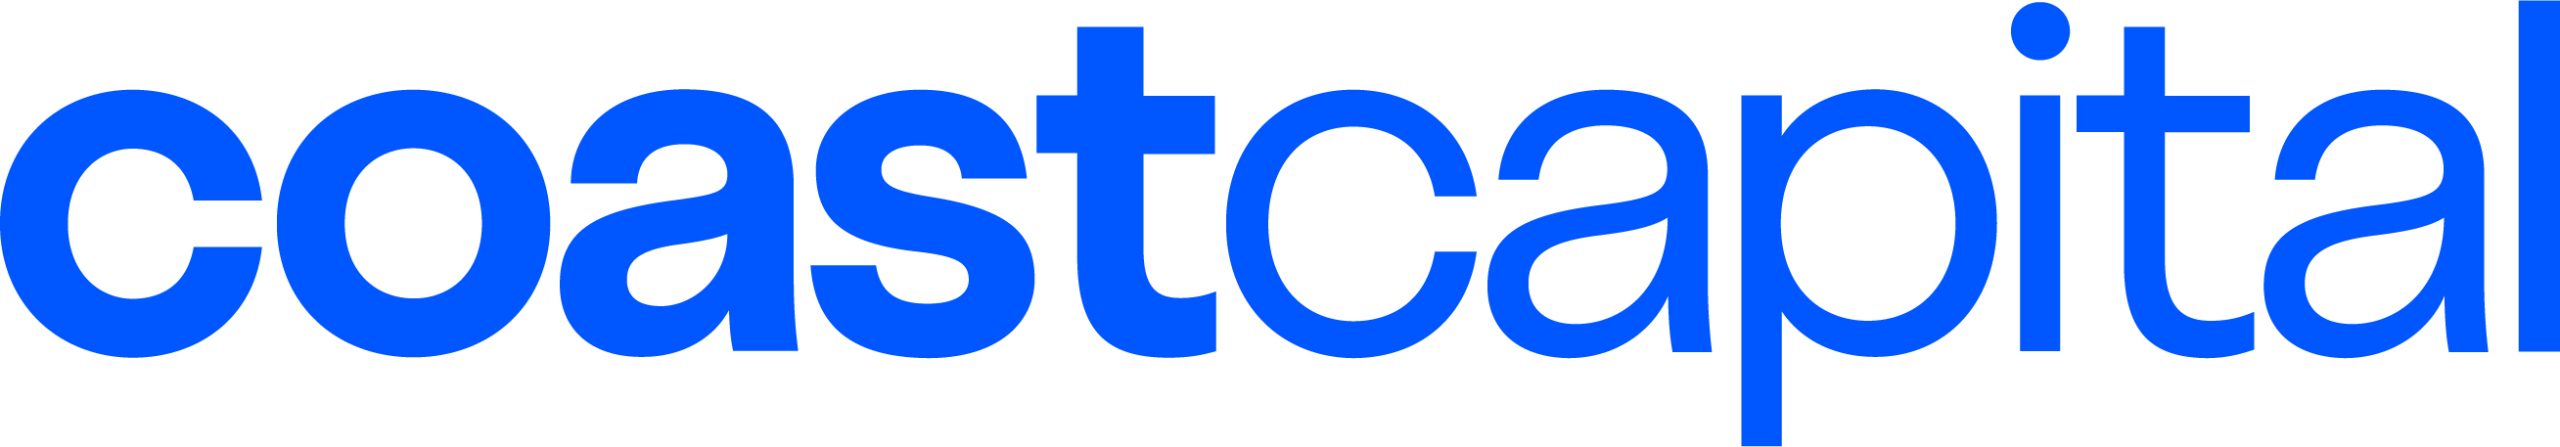 Coast Capital Logotype_RGB_OceanBlue